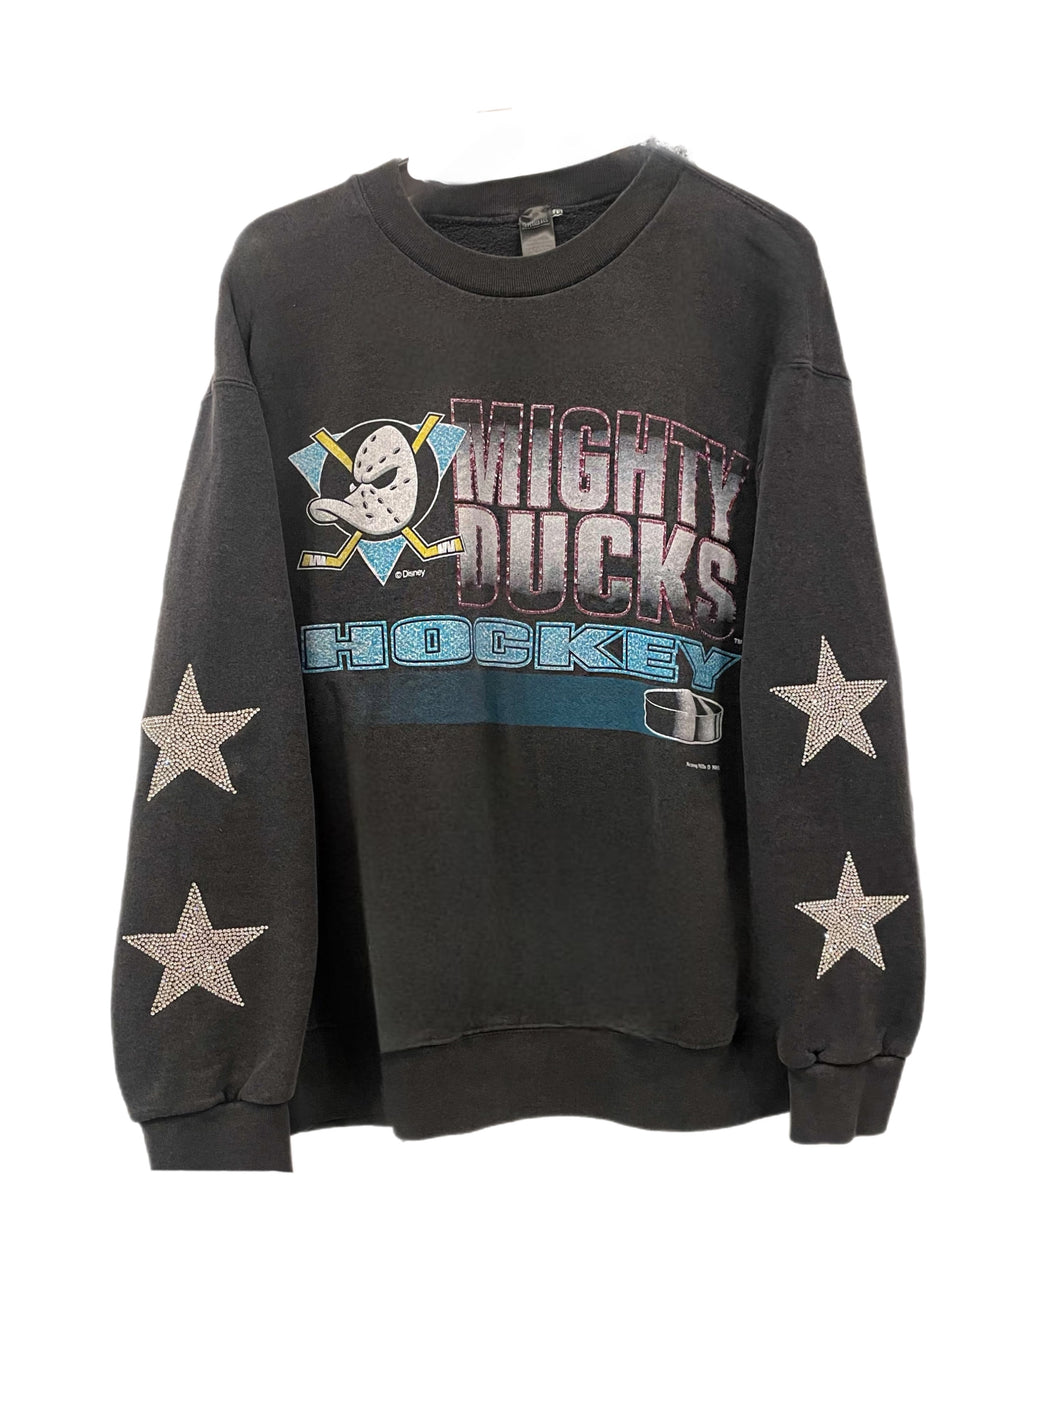 Anaheim Ducks, Hockey One of a KIND Vintage Mighty Ducks “Rare Find” Sweatshirt with Crystal Star Design.